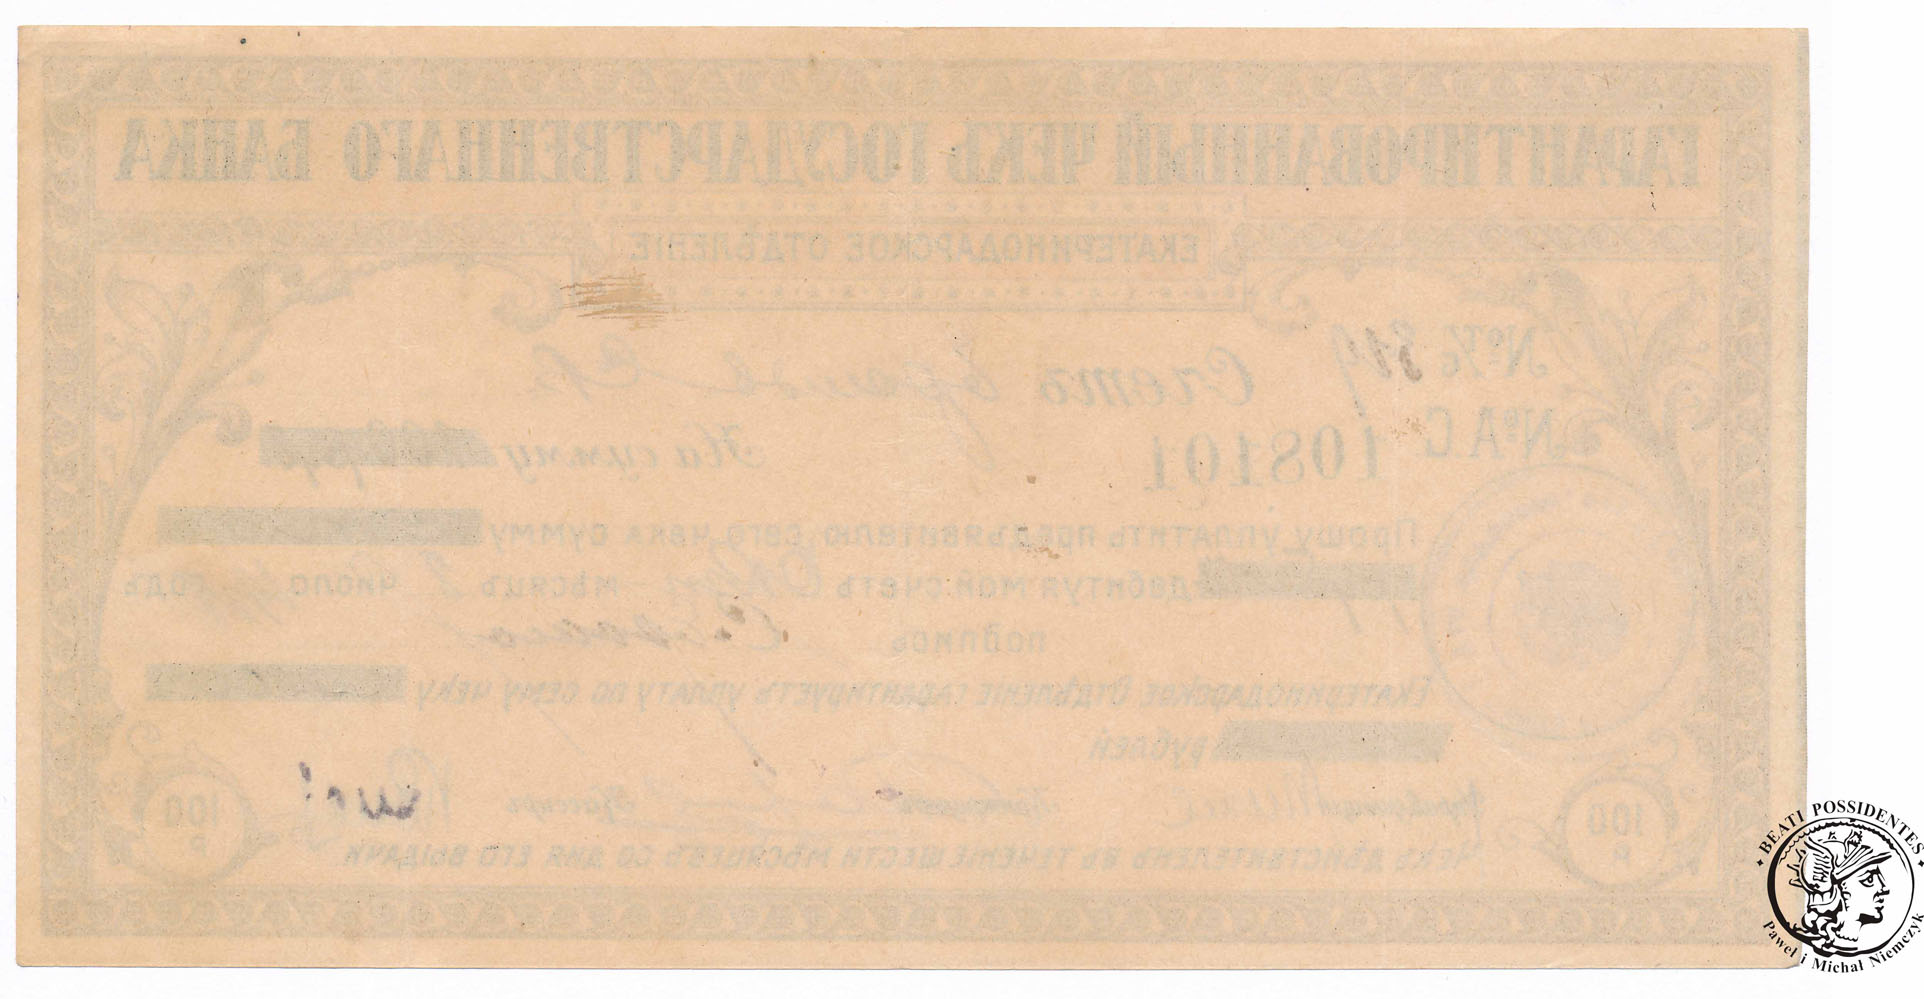 Rosja Czek na 100 rubli z 1928 roku